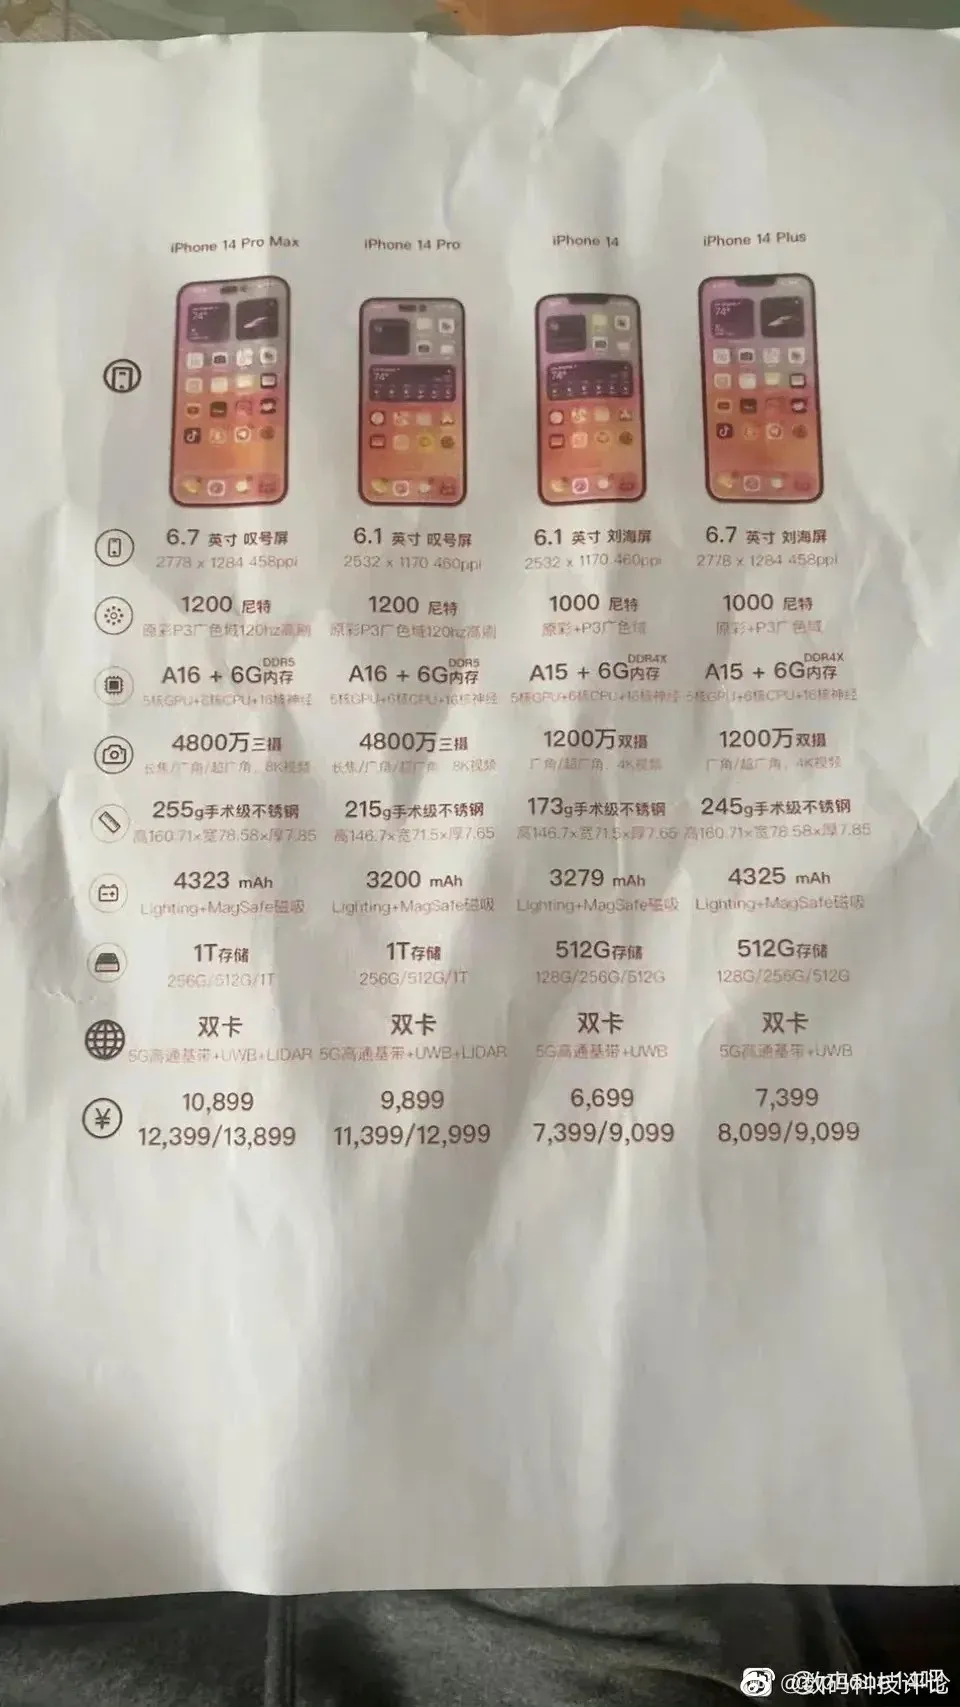 Bocoran spesikasi dan harga iPhone 14 yang beredar di media sosial Weibo.